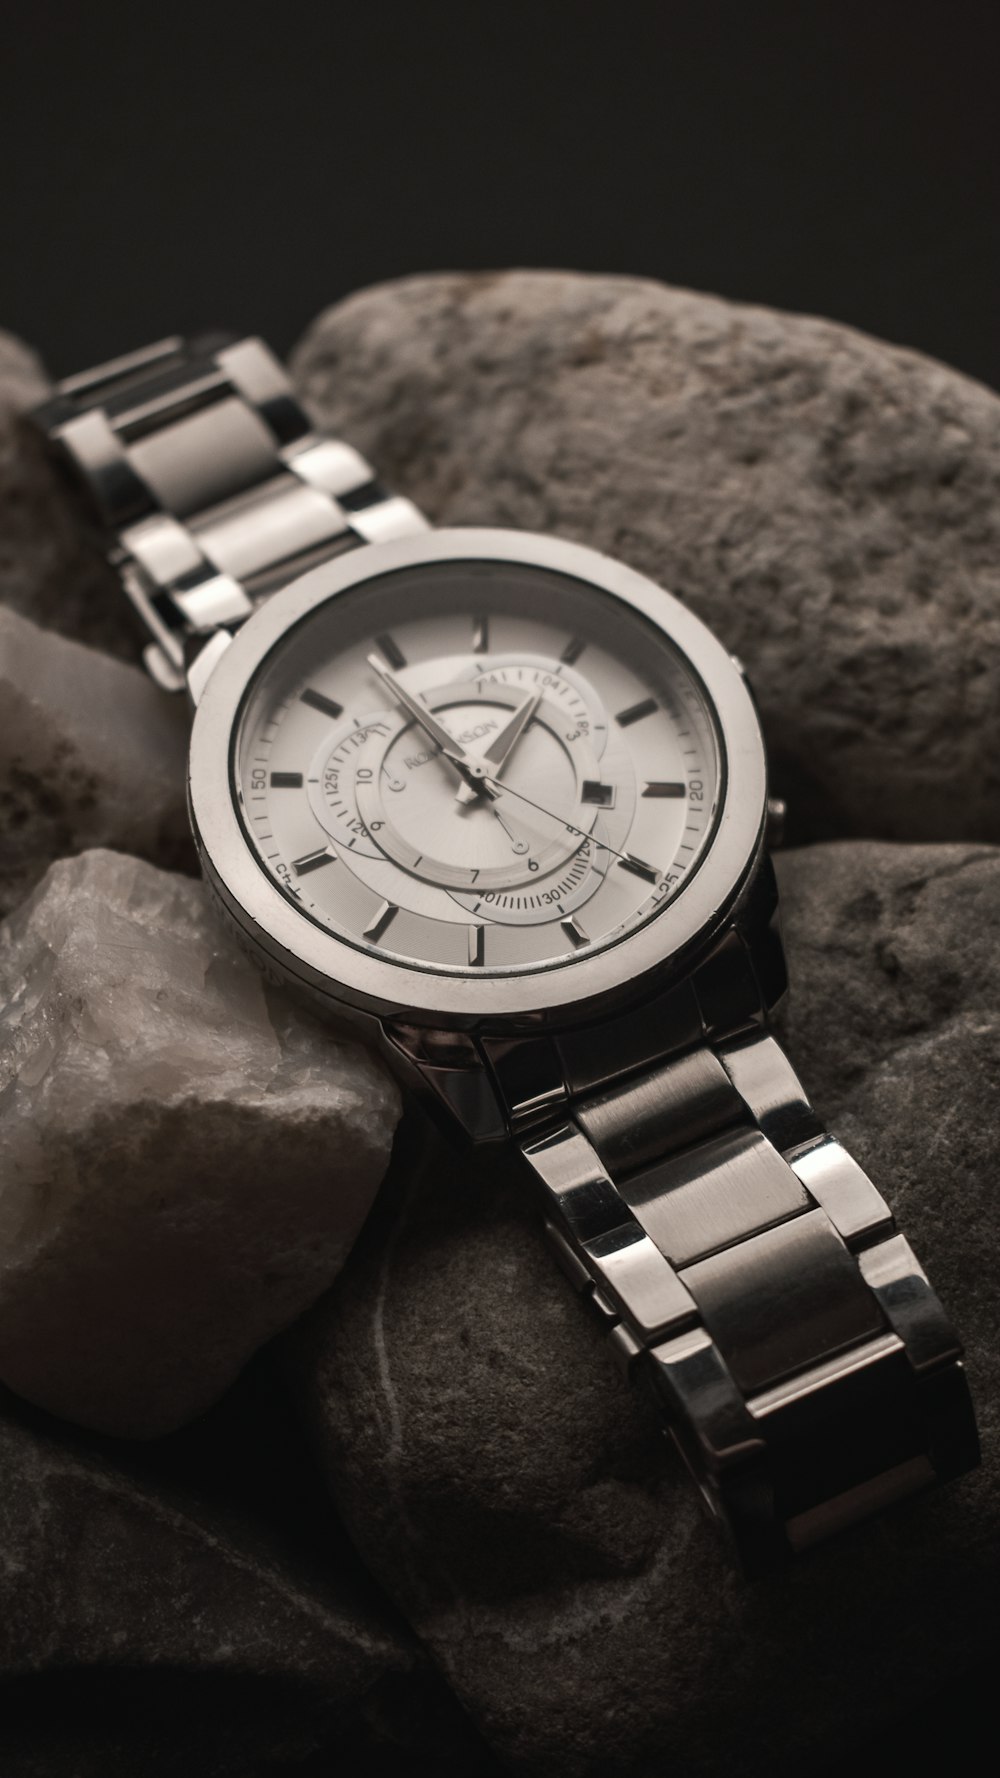 silver link bracelet round analog watch at 10 00